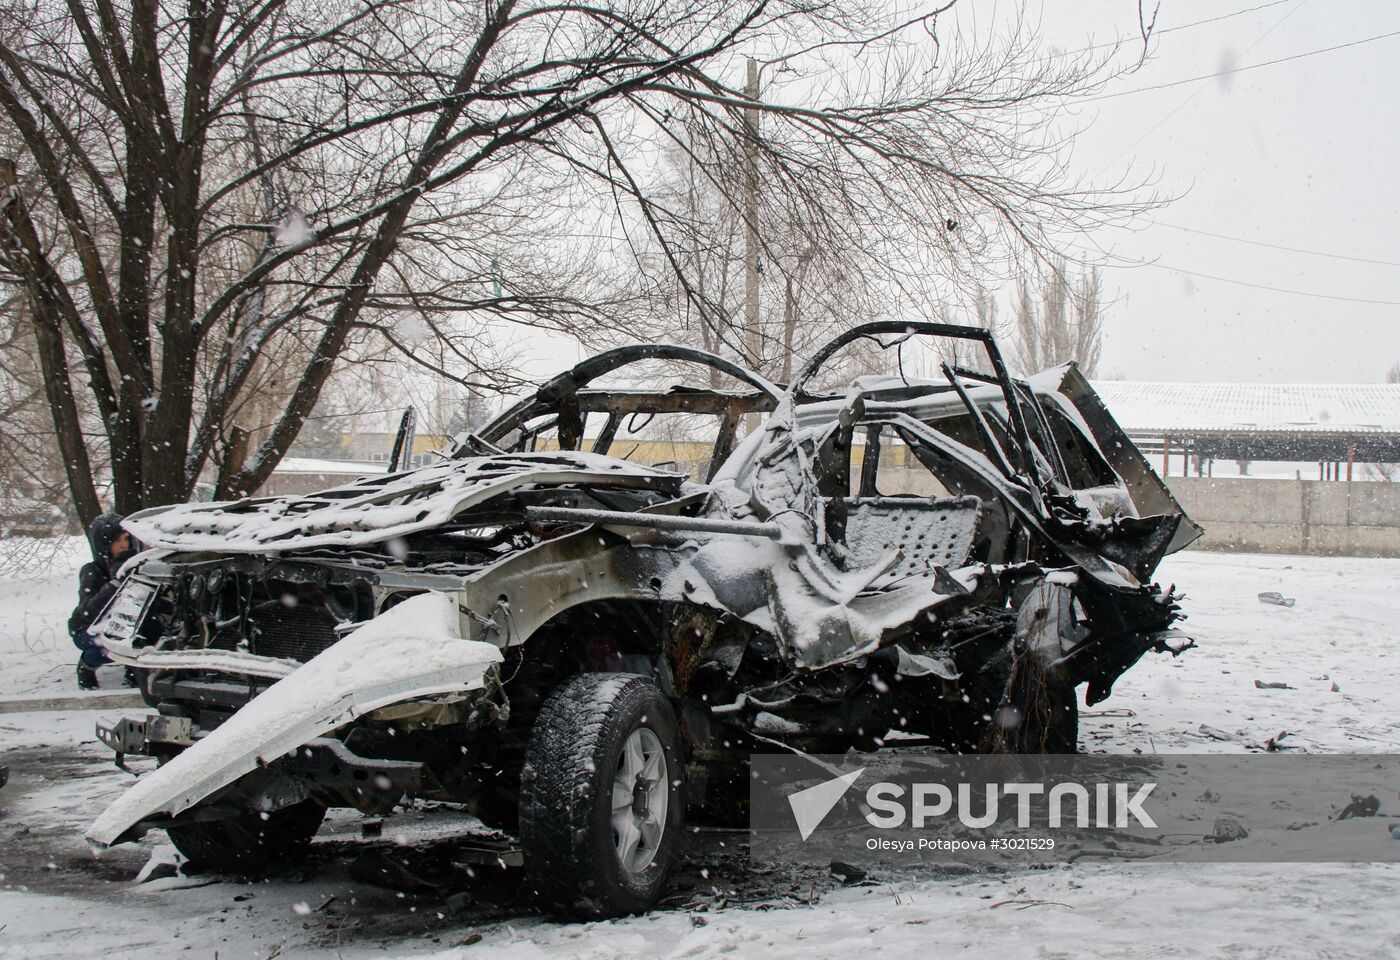 Car explodes in Luhansk